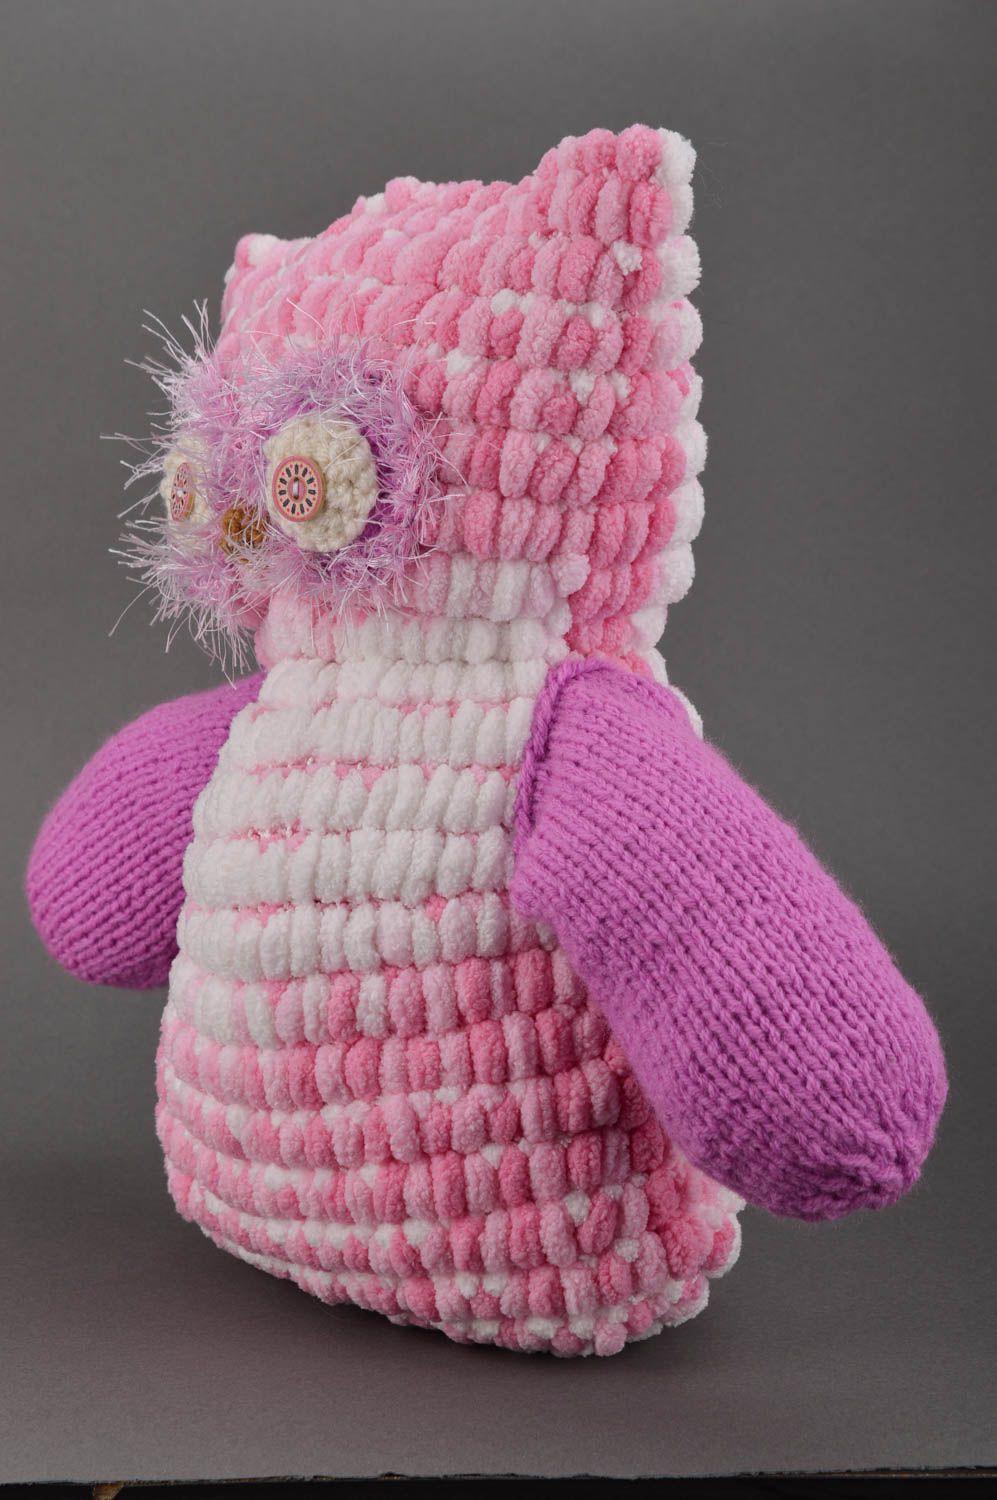 Handmade soft owl toy decorative stuffed toy gift for baby nursery decor ideas photo 3